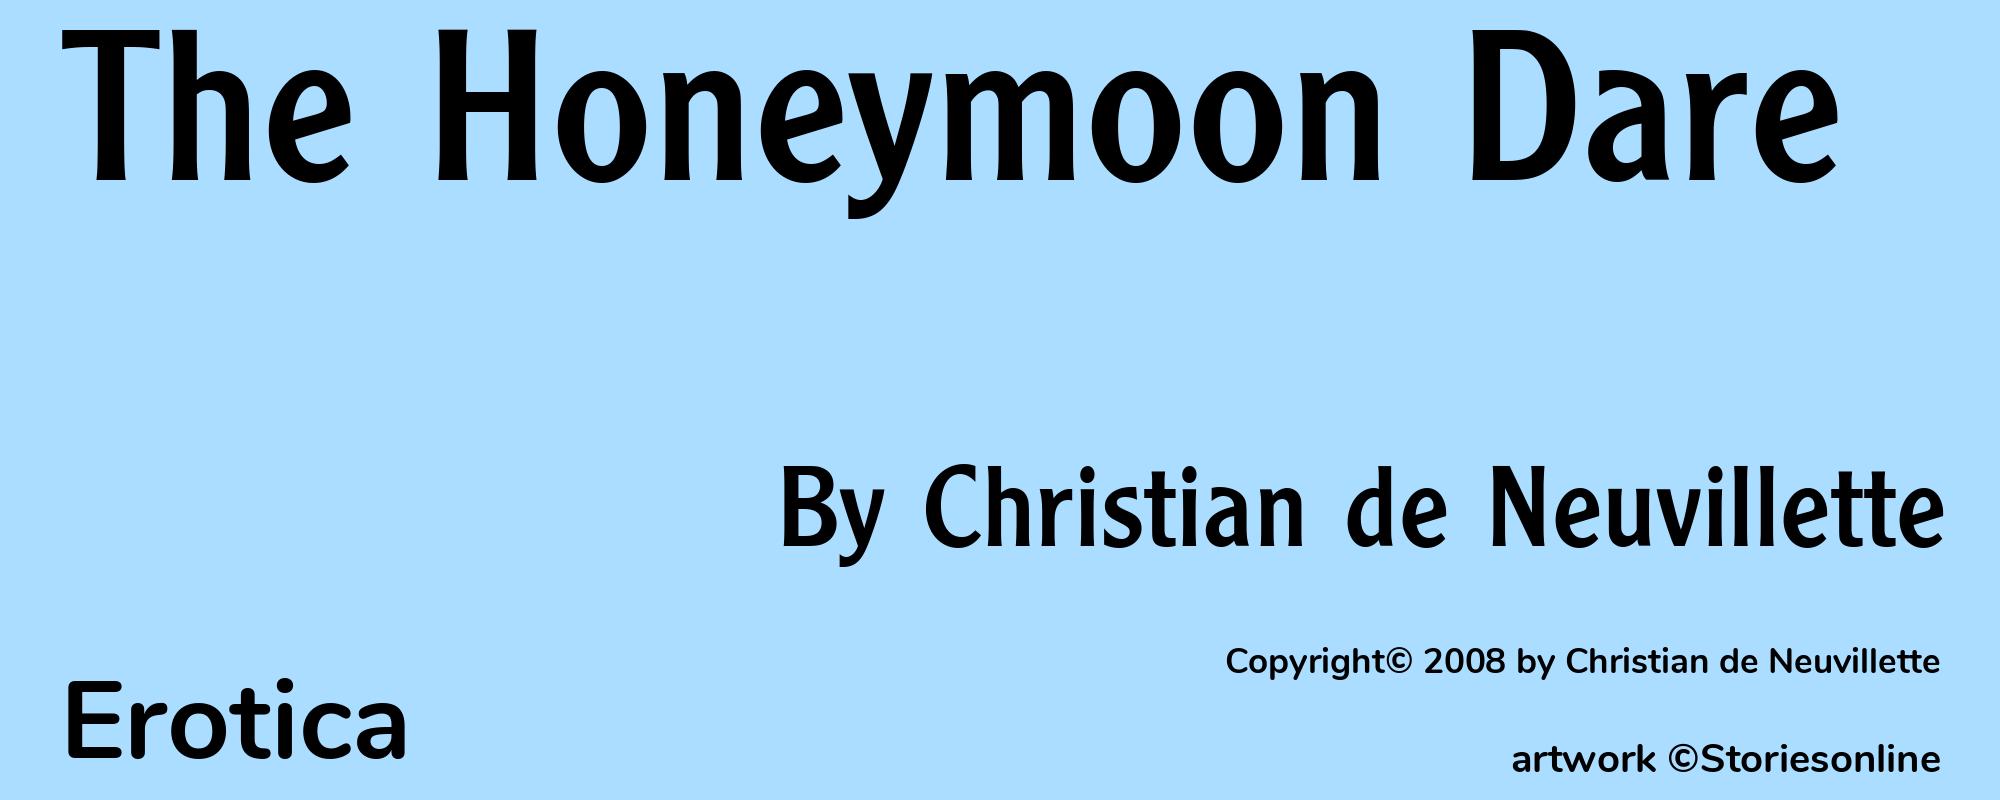 The Honeymoon Dare - Cover